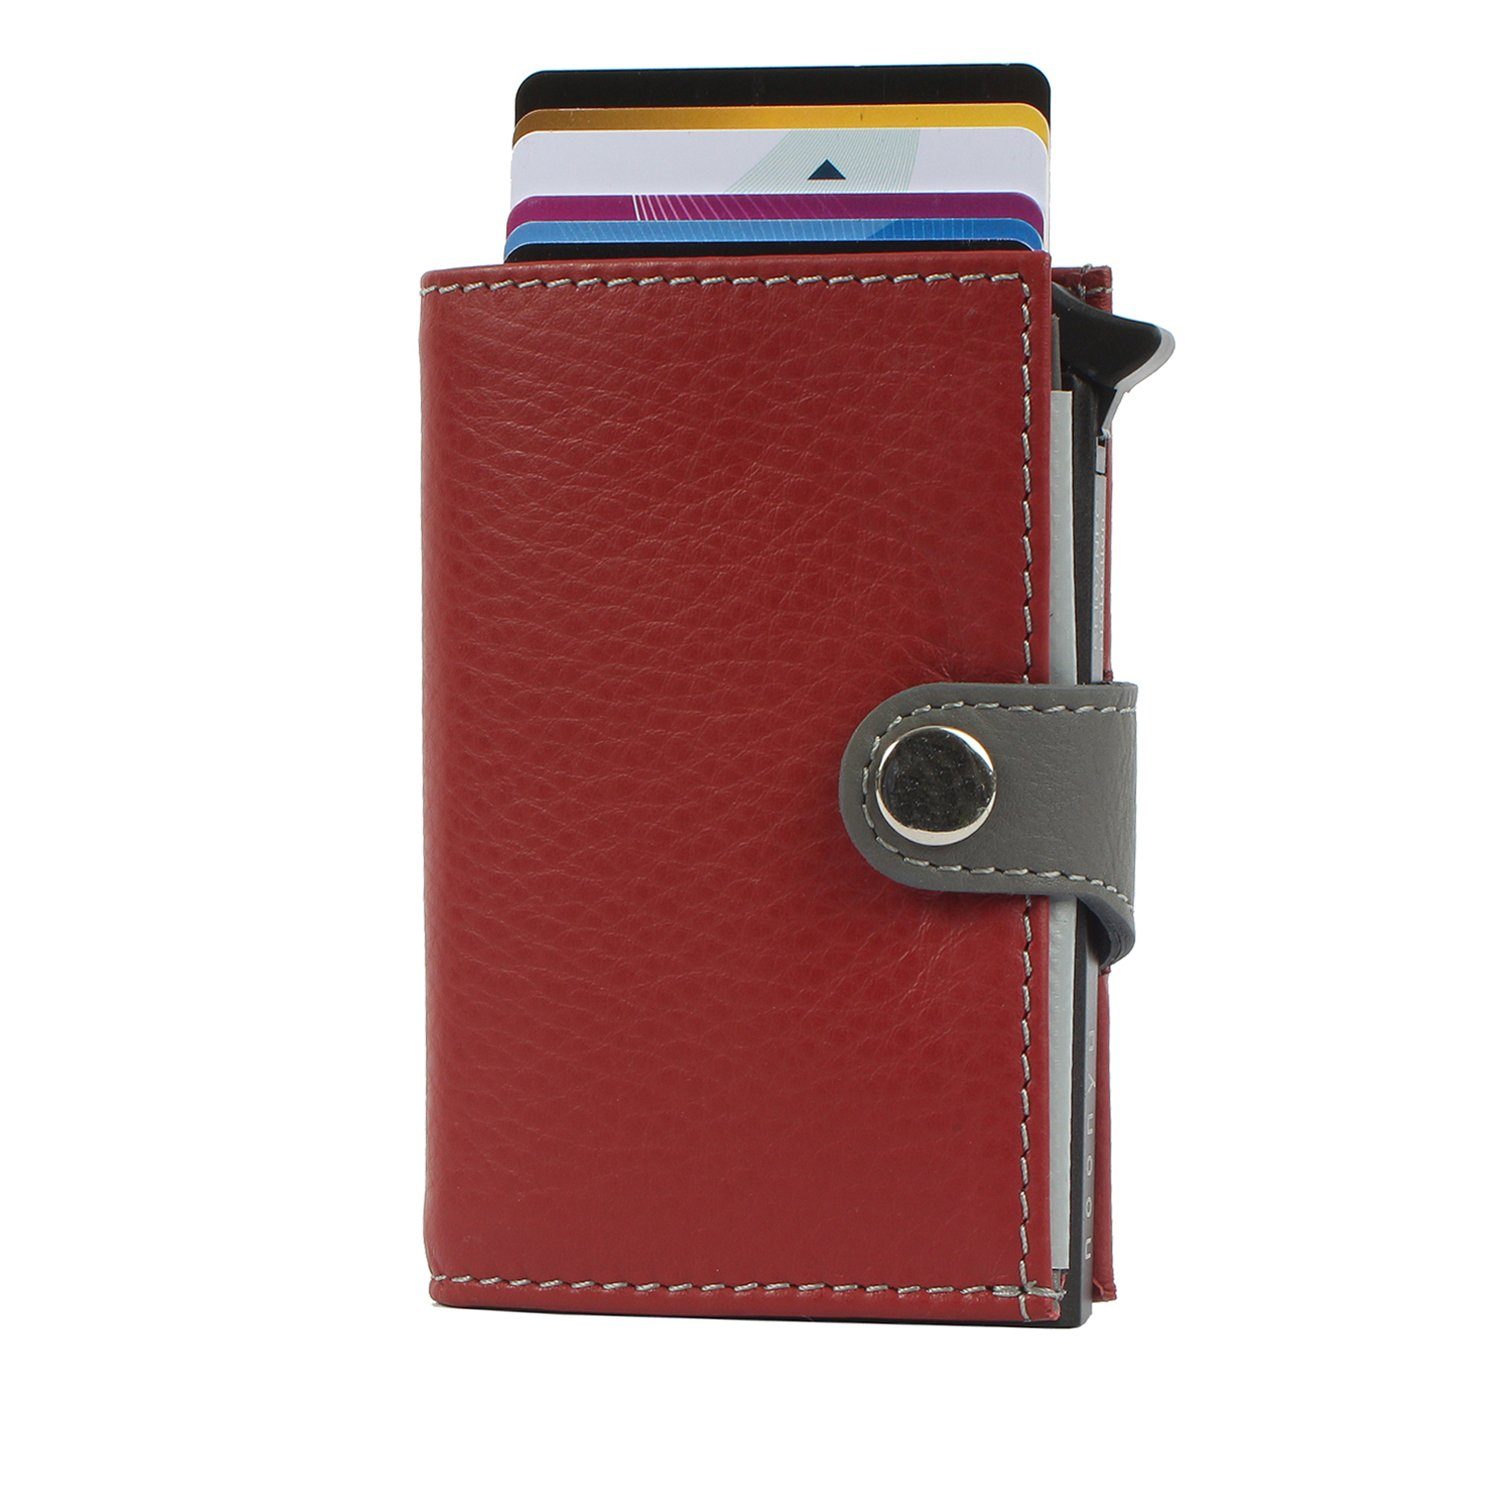 Margelisch Mini Geldbörse noonyu Kreditkartenbörse aus Upcycling Leder leather, karminrot single